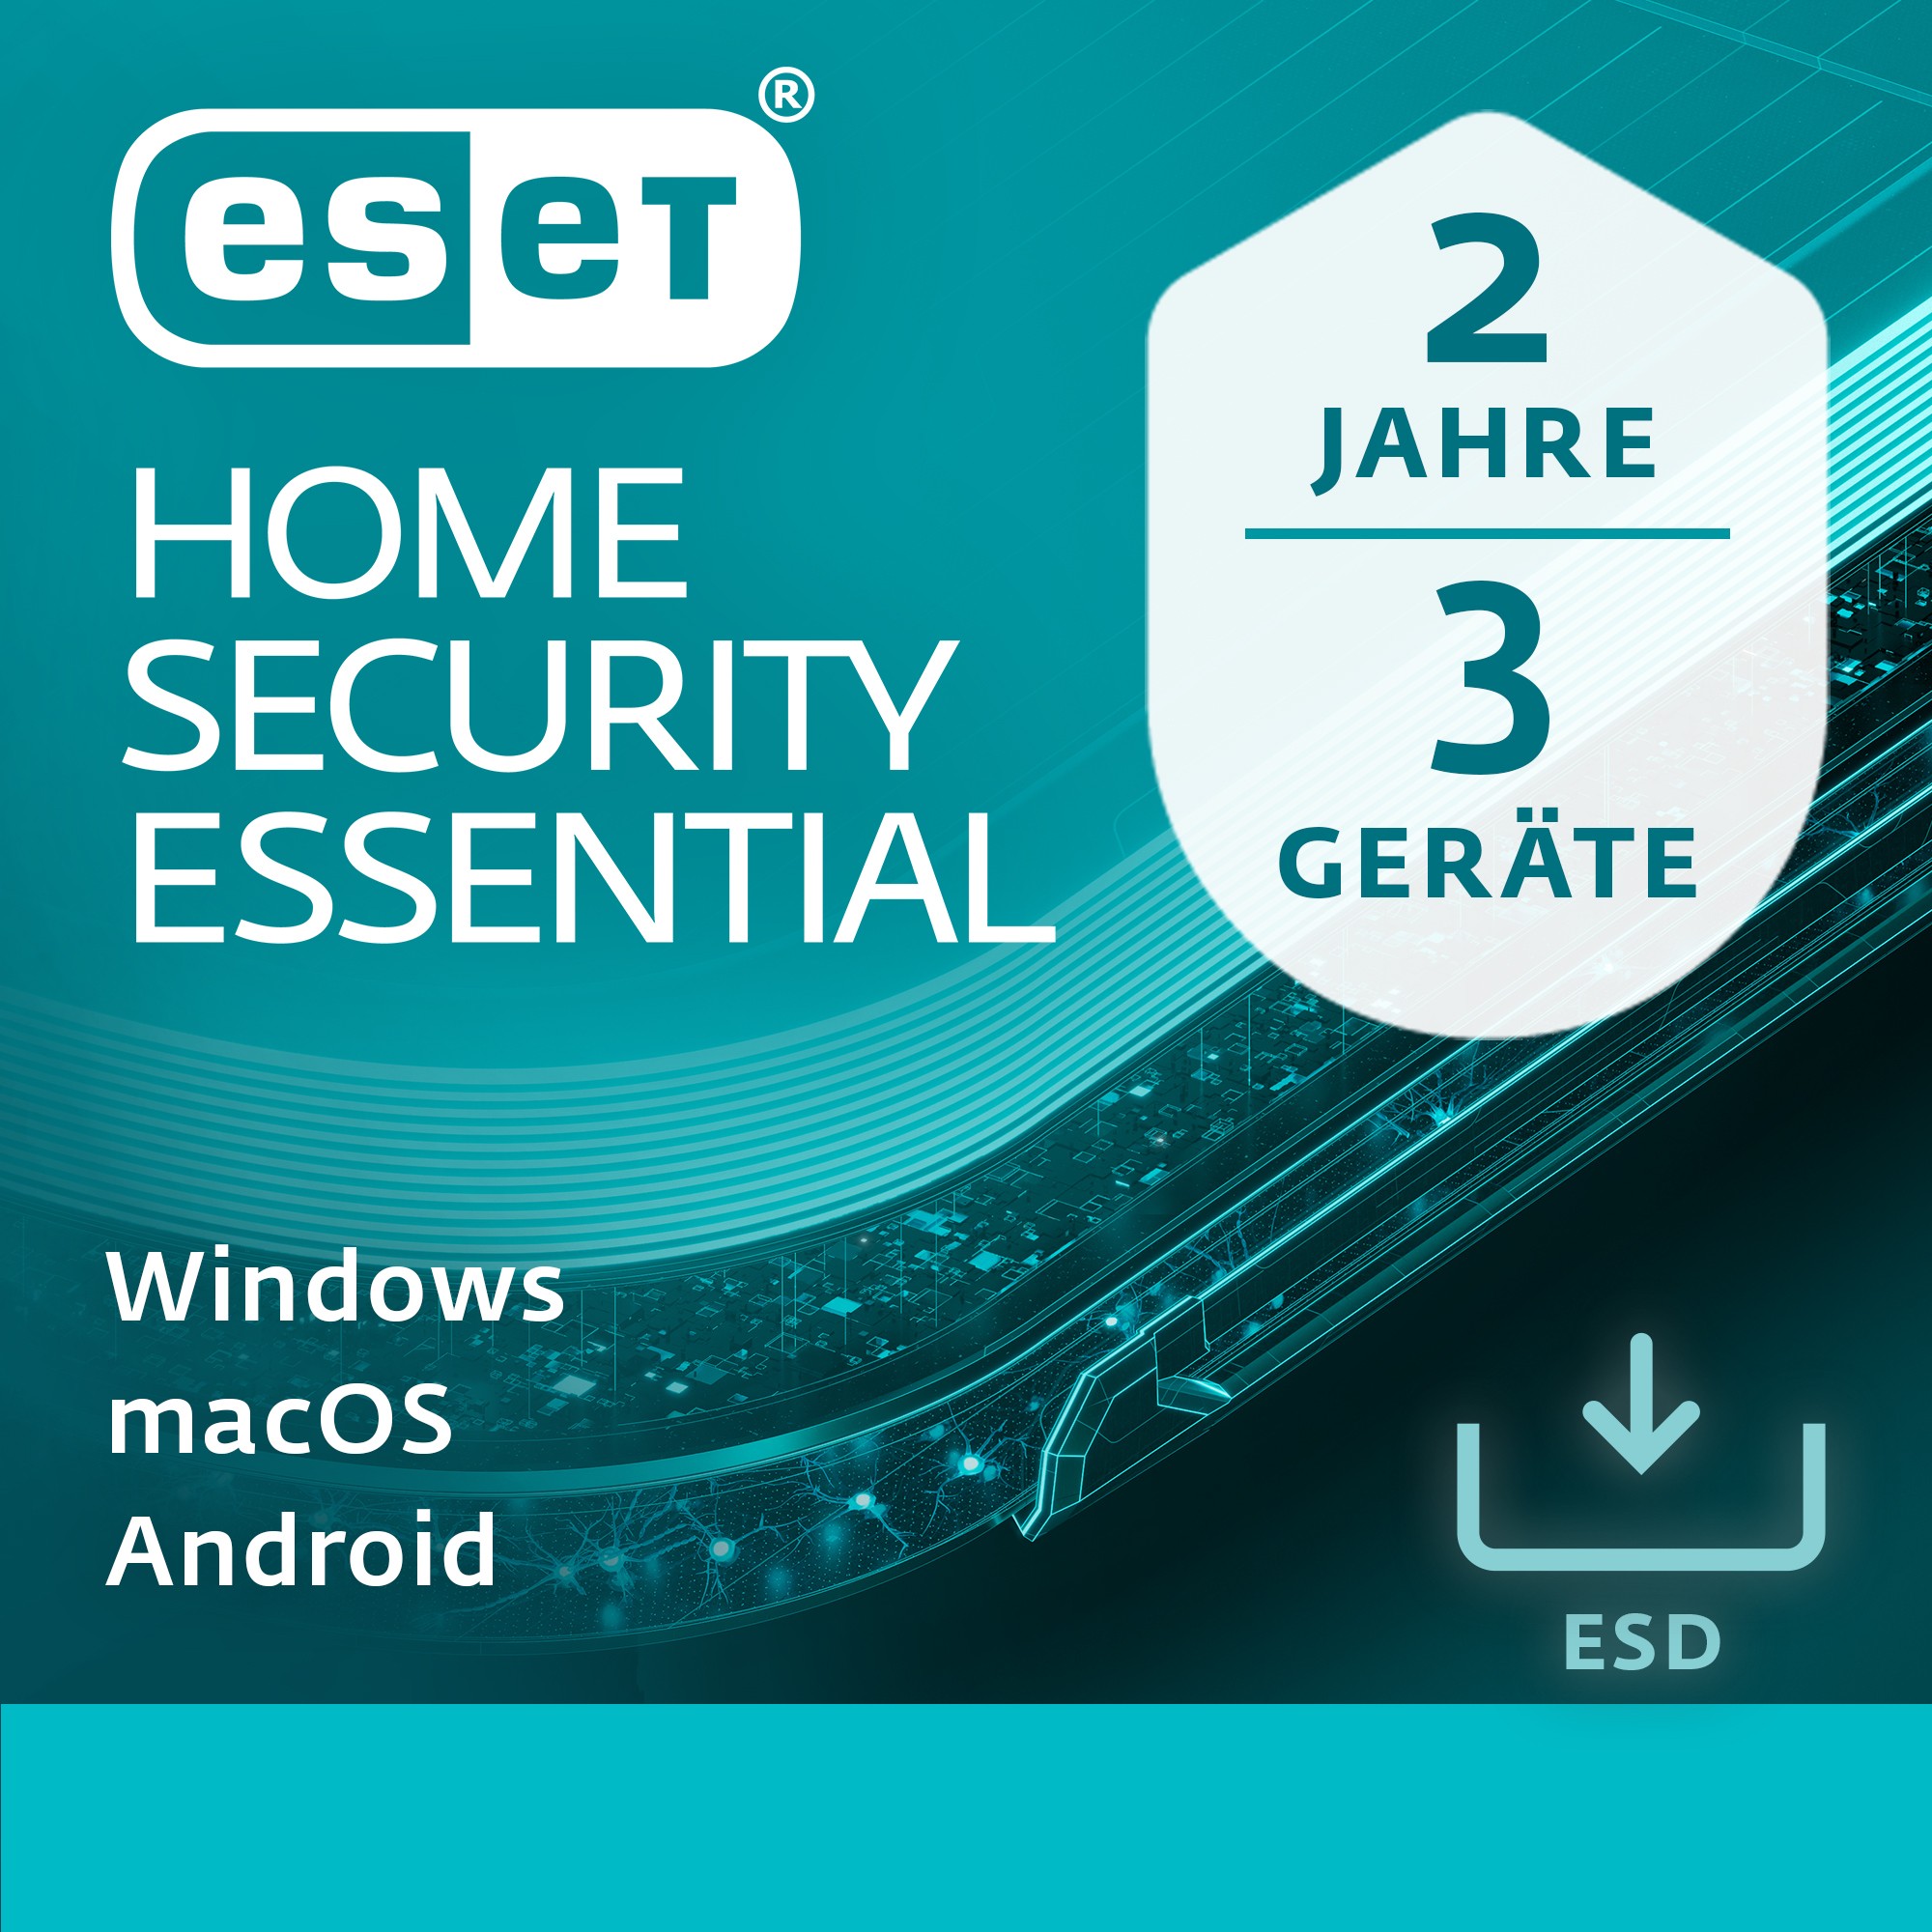 ESET EHSE-N2A3-VAKT-E, ESD-Lizenzen, ESET Home Security  (BILD1)